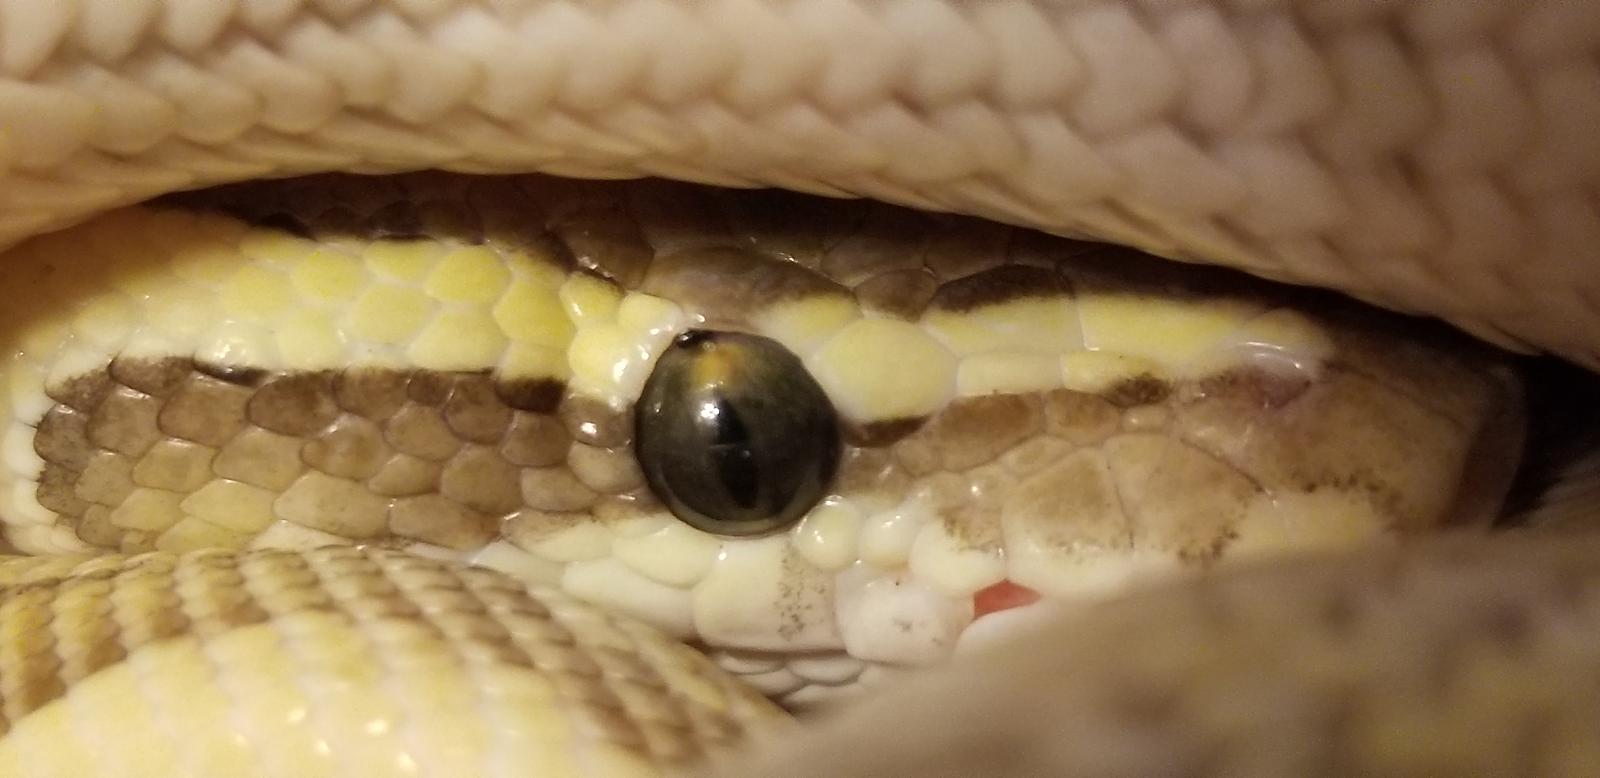 snake mite in eye?